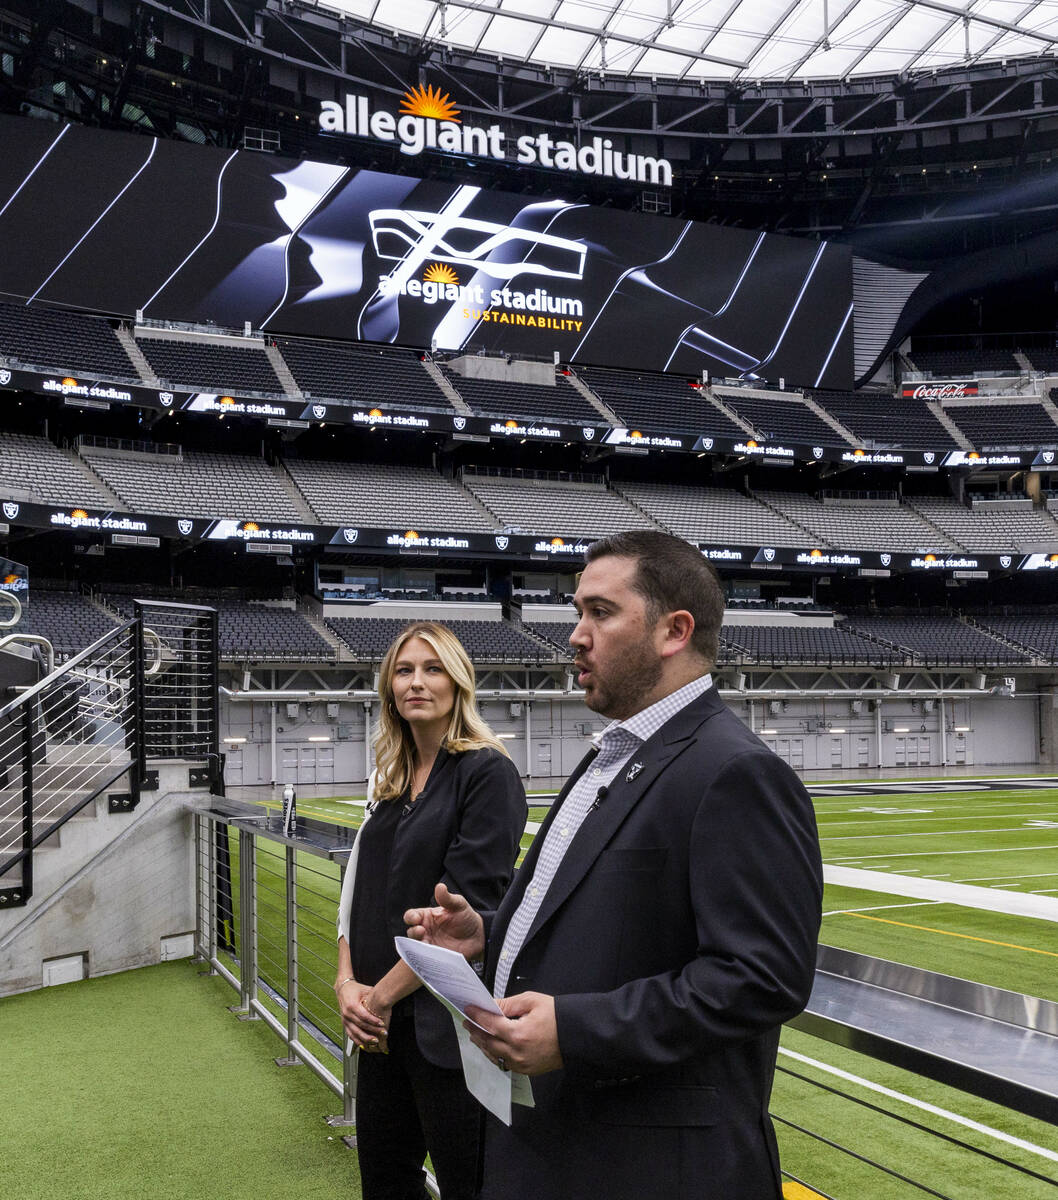 The Raiders Chris Sotiropulos, vice president of stadium operations, and Allegiant Stadium's Sa ...